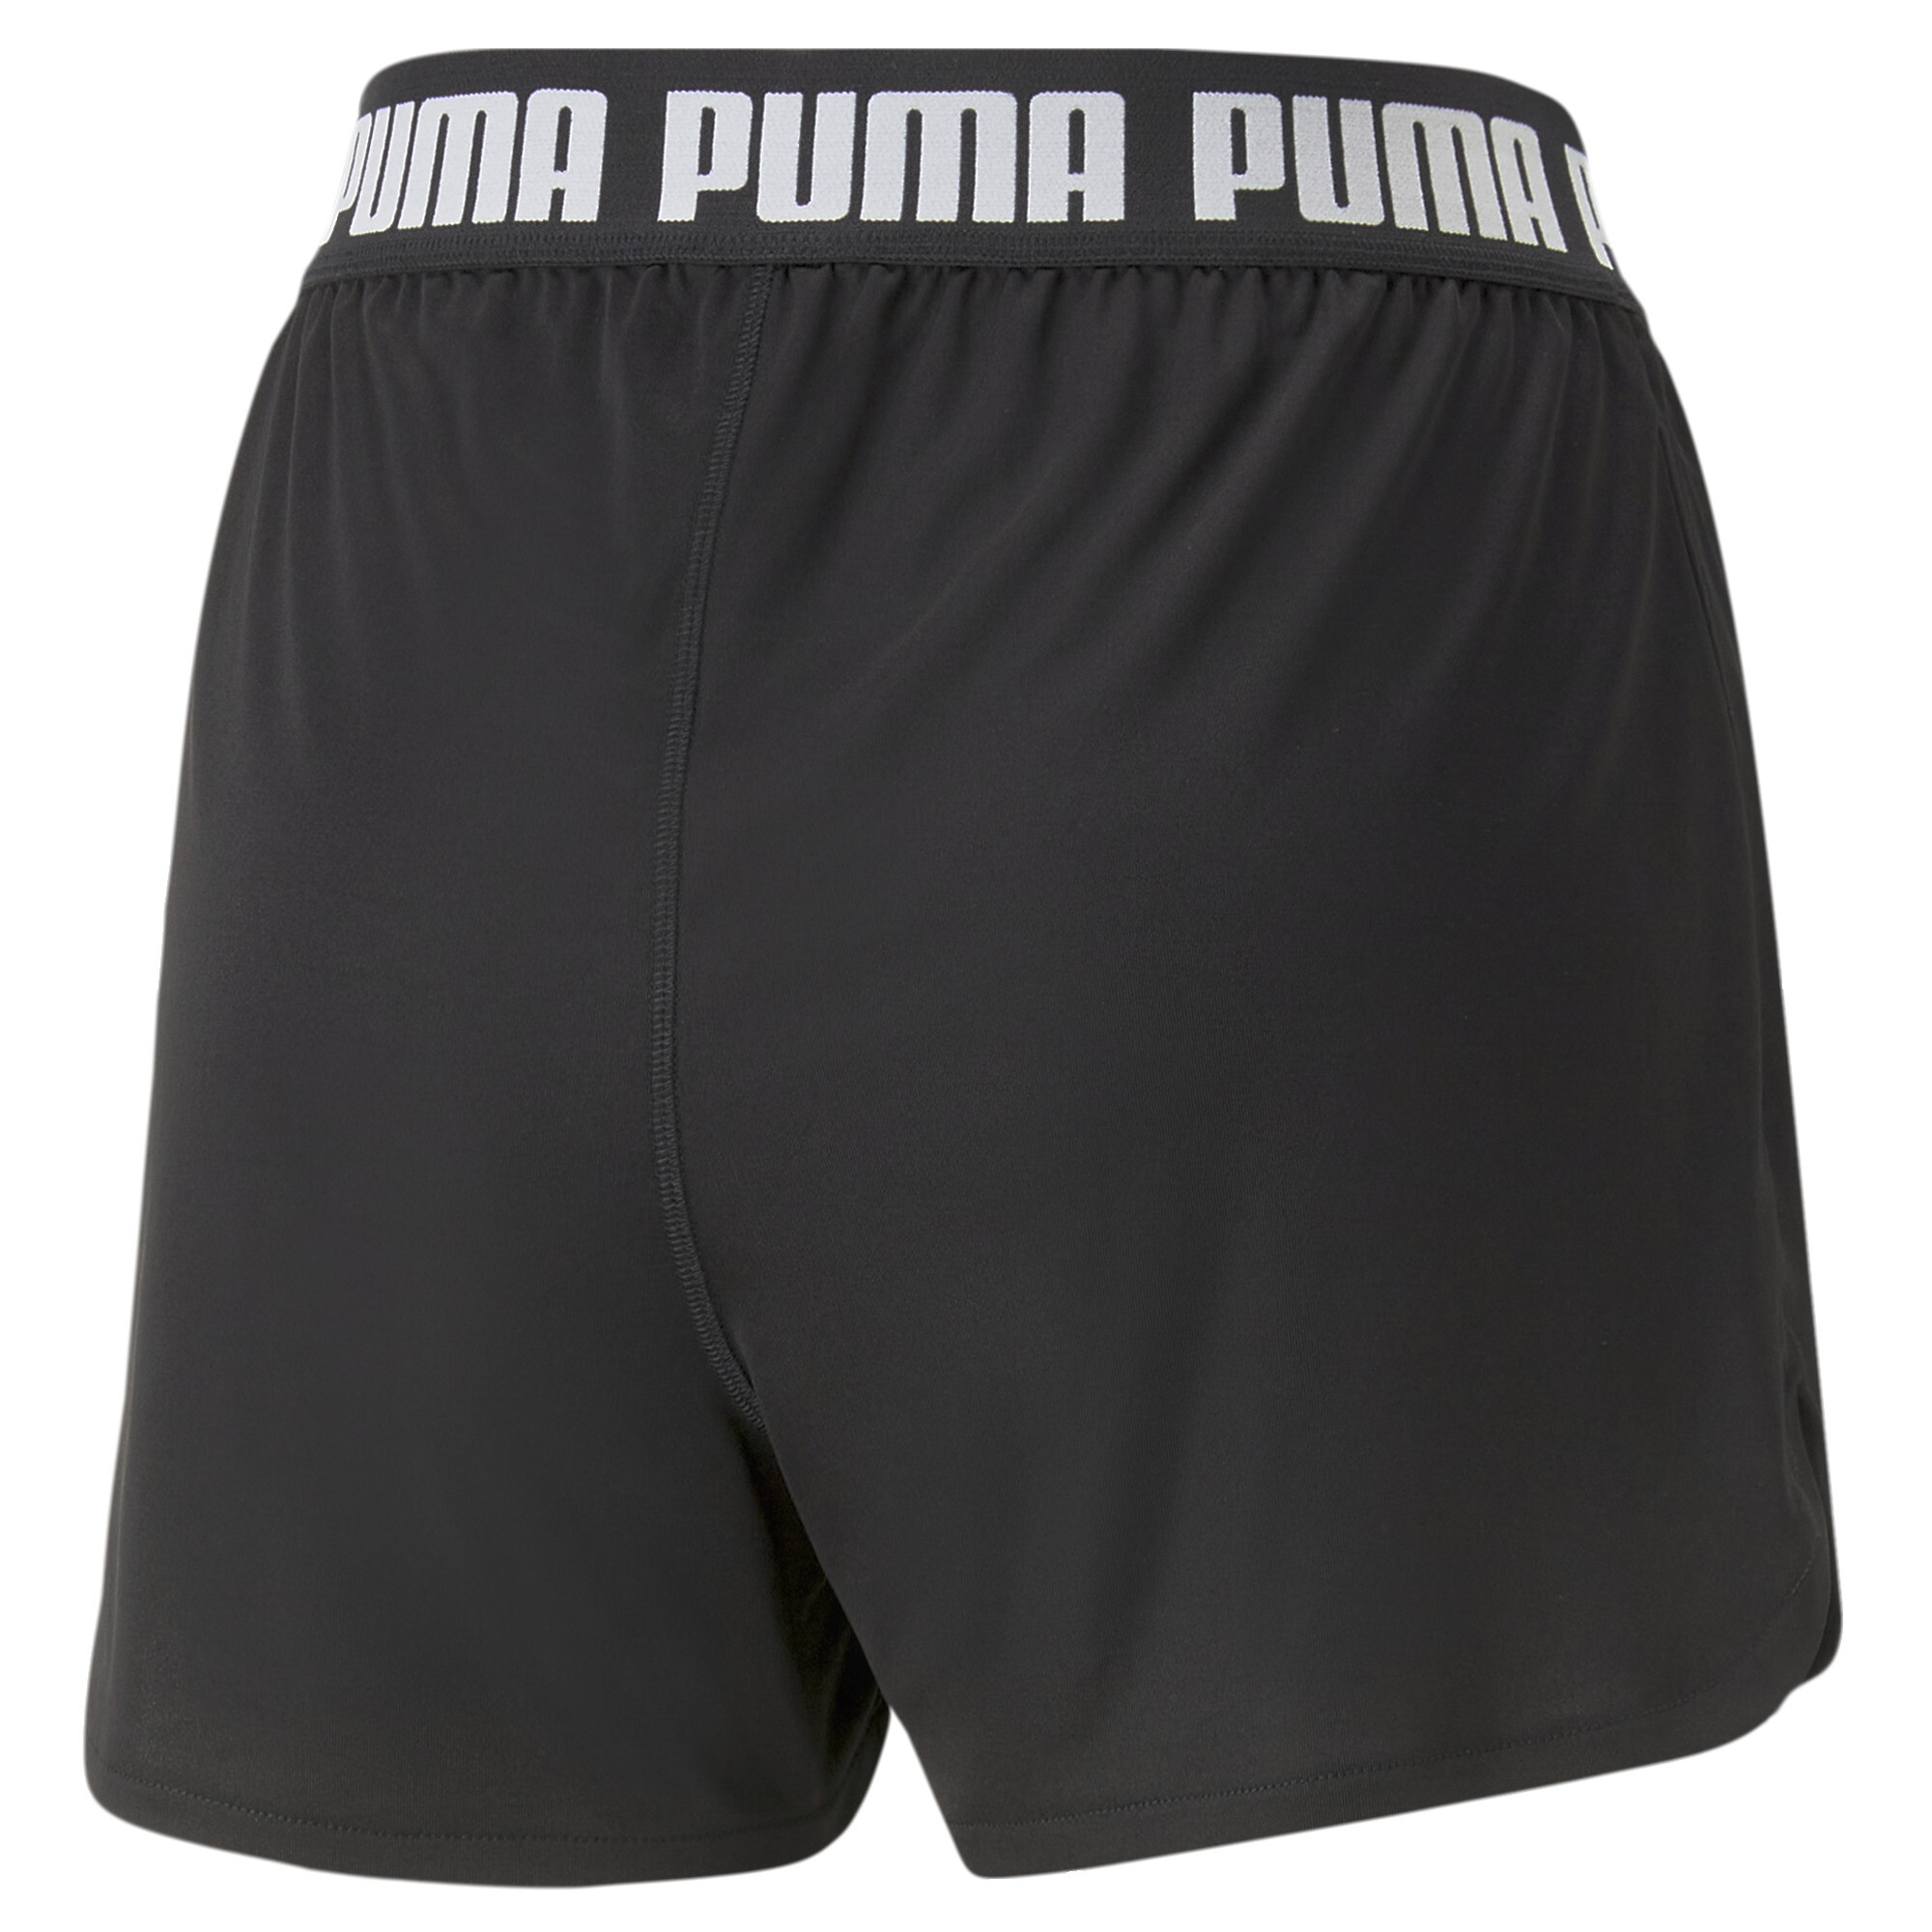 Women's Puma TRAIN ALL DAY 3 Knit Training Shorts, Black, Size 2X, Clothing